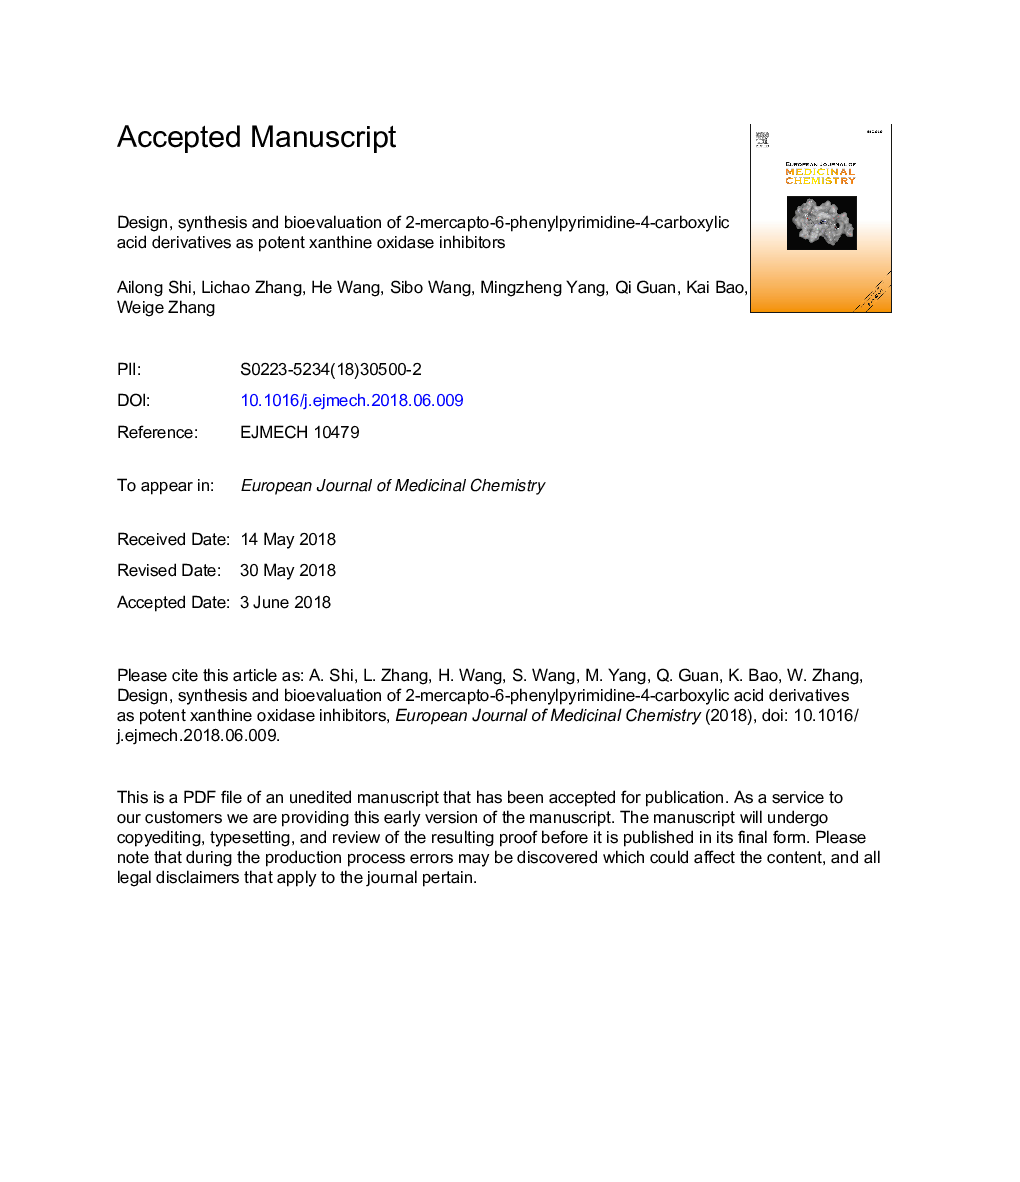 Design, synthesis and bioevaluation of 2-mercapto-6-phenylpyrimidine-4-carboxylic acid derivatives as potent xanthine oxidase inhibitors